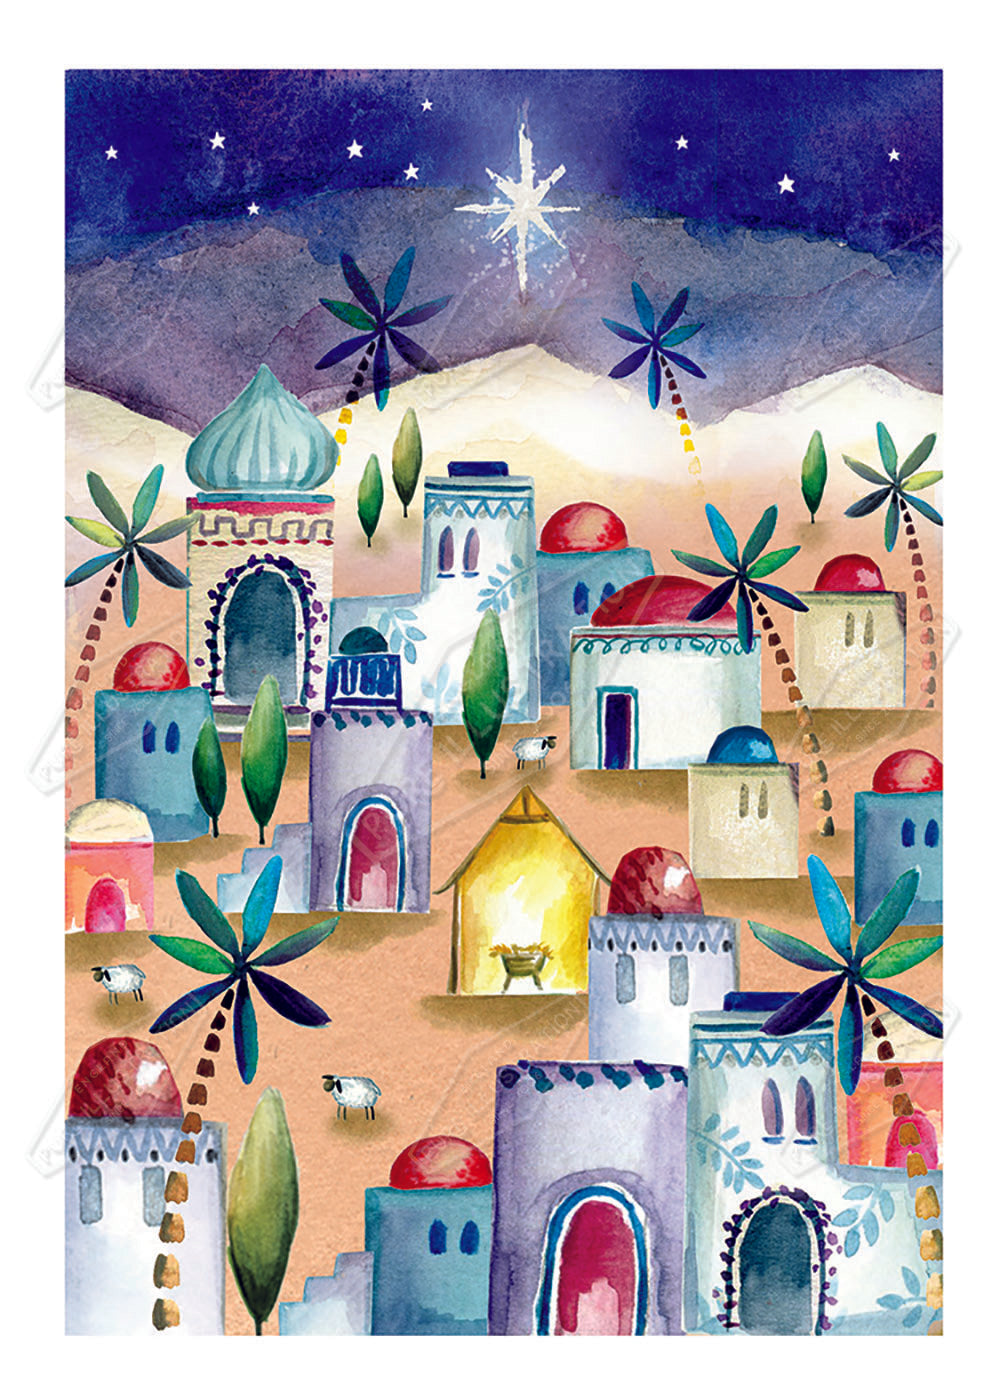 00025812DEV - Deva Evans is represented by Pure Art Licensing Agency - Christmas Greeting Card Design